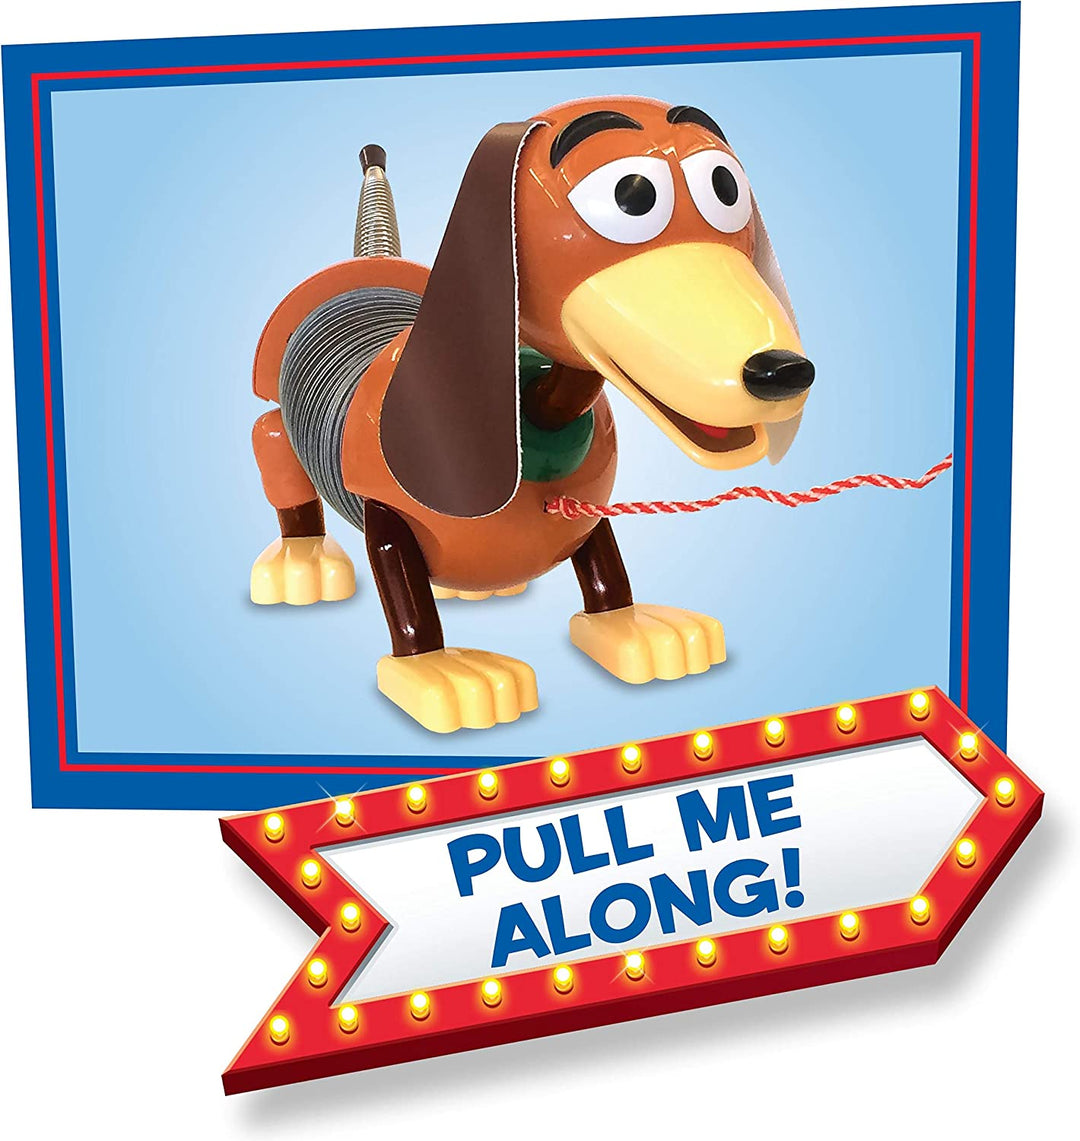 Official Disney Pixar Toy Story Slinky Dog